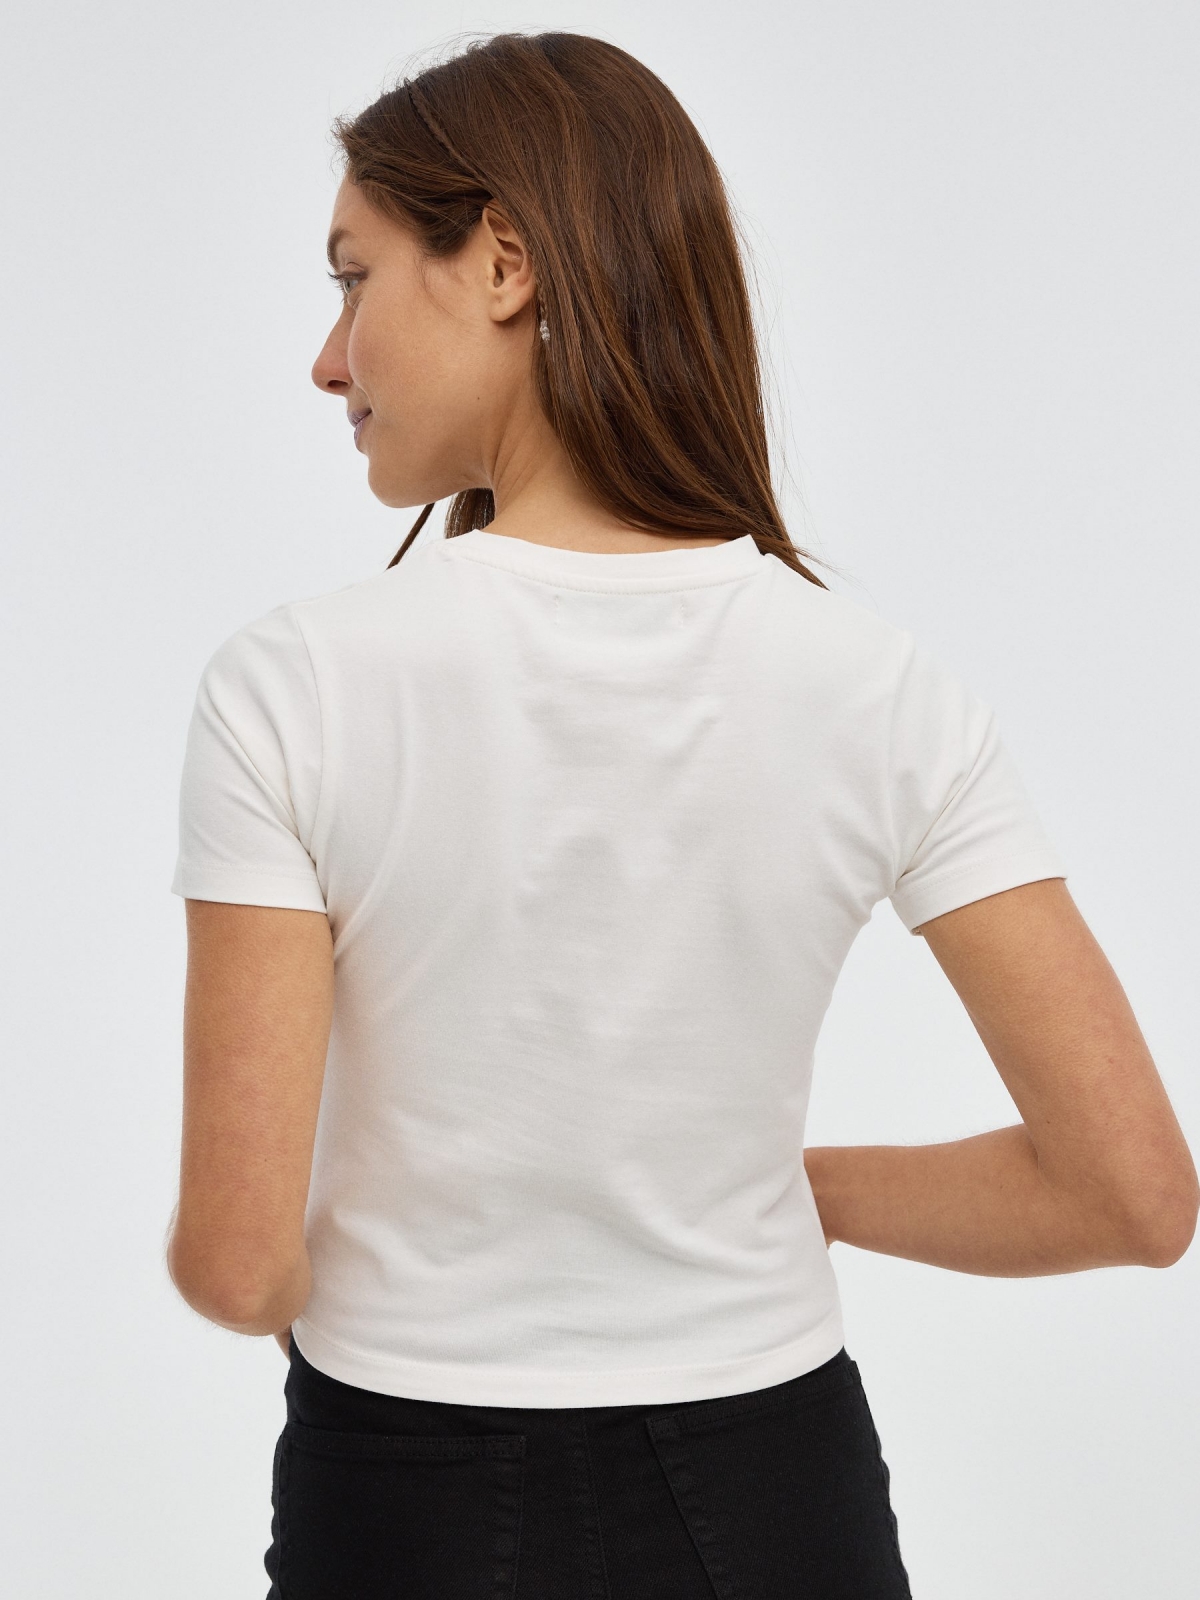 Camiseta crop print mariposas blanco roto vista media trasera